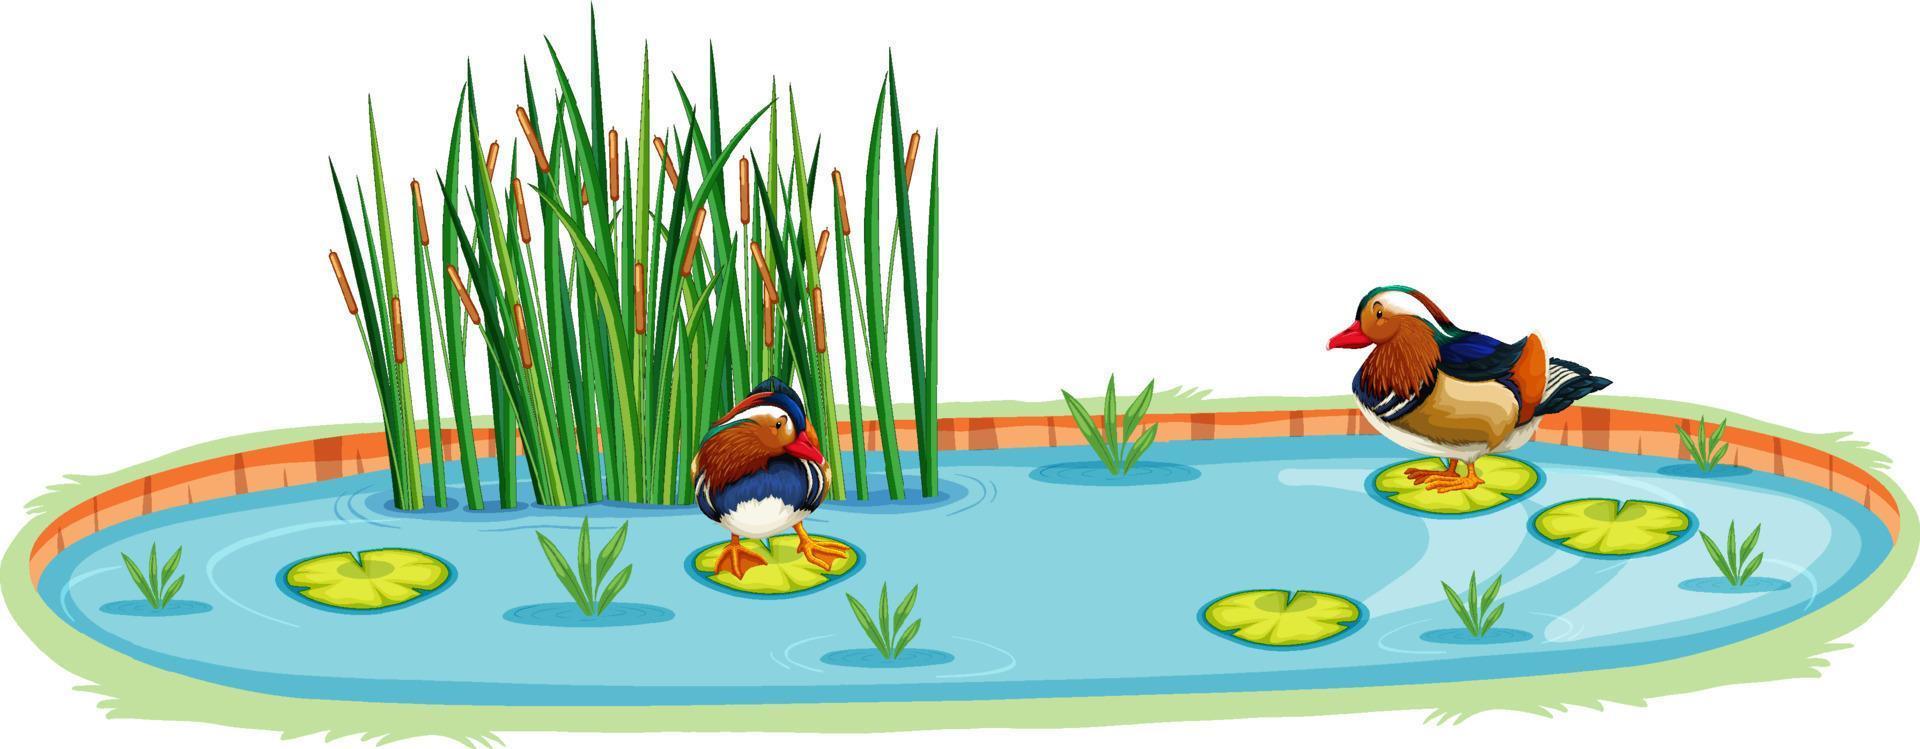 canards dans un étang en style cartoon vecteur